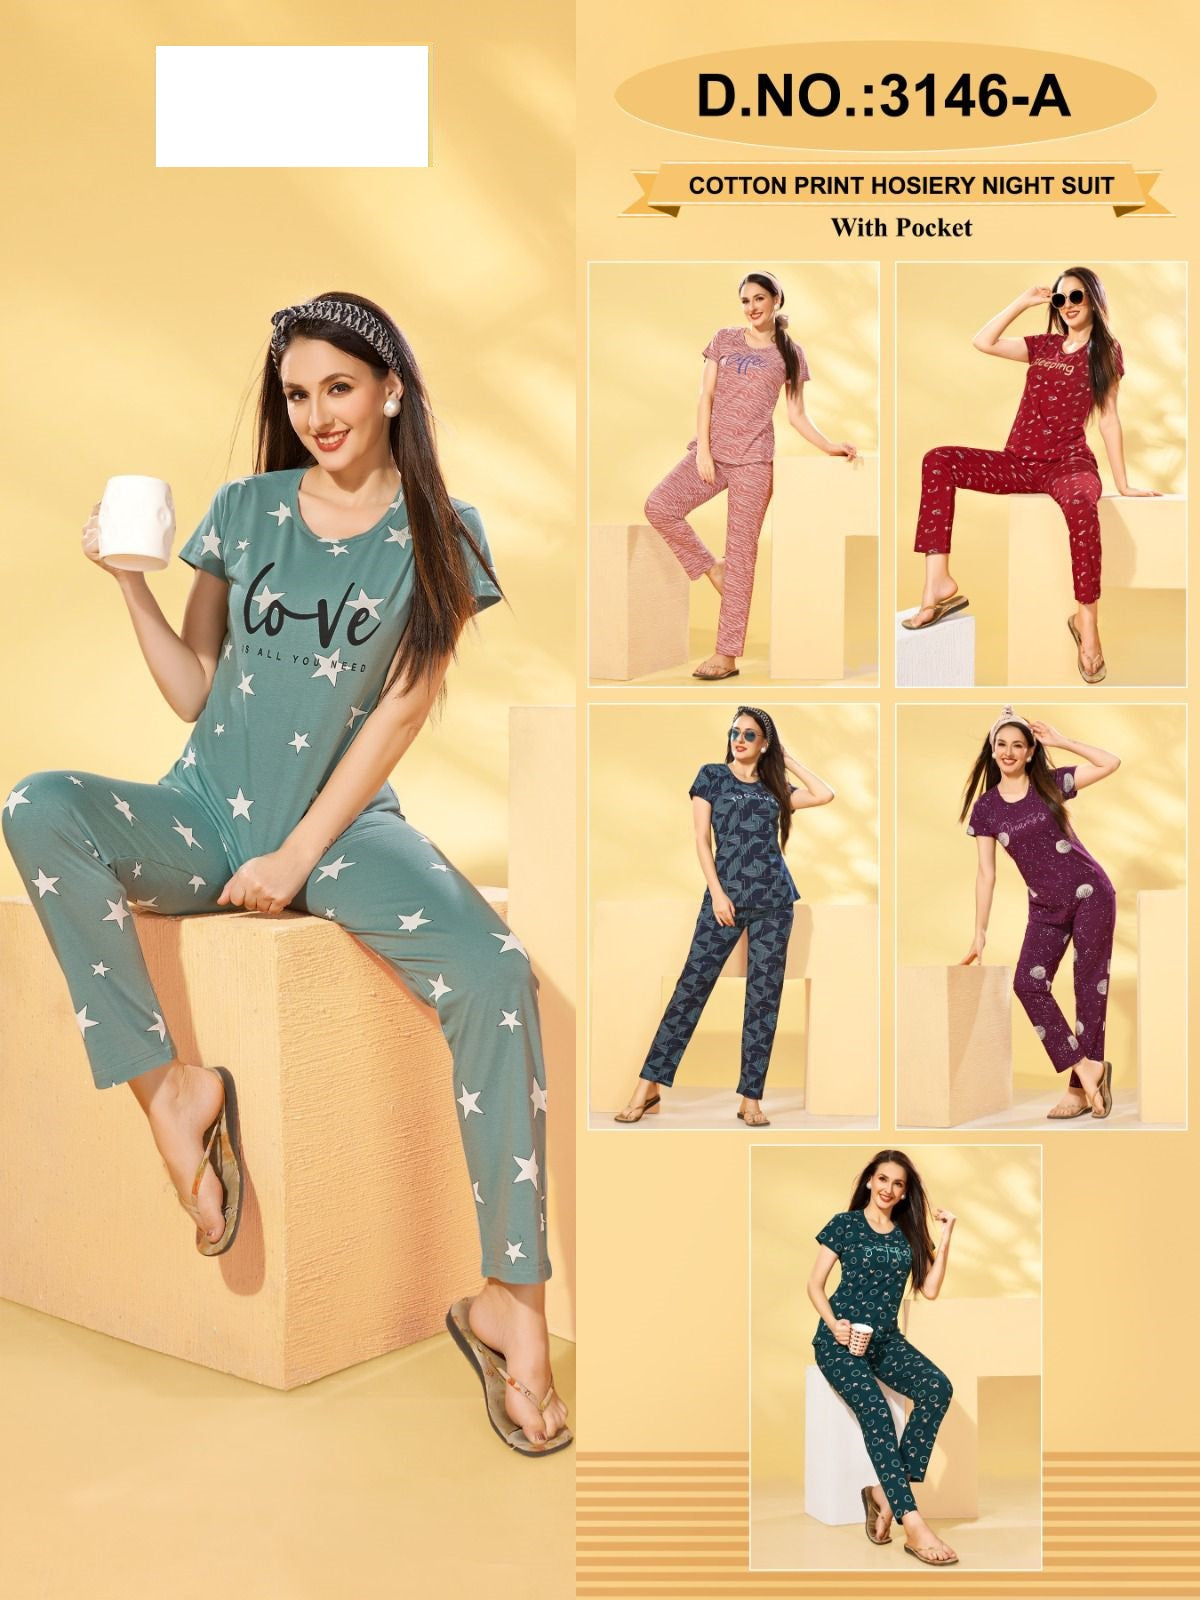 3146A Wld Hosiery Cotton Pyjama Night Suits Supplier